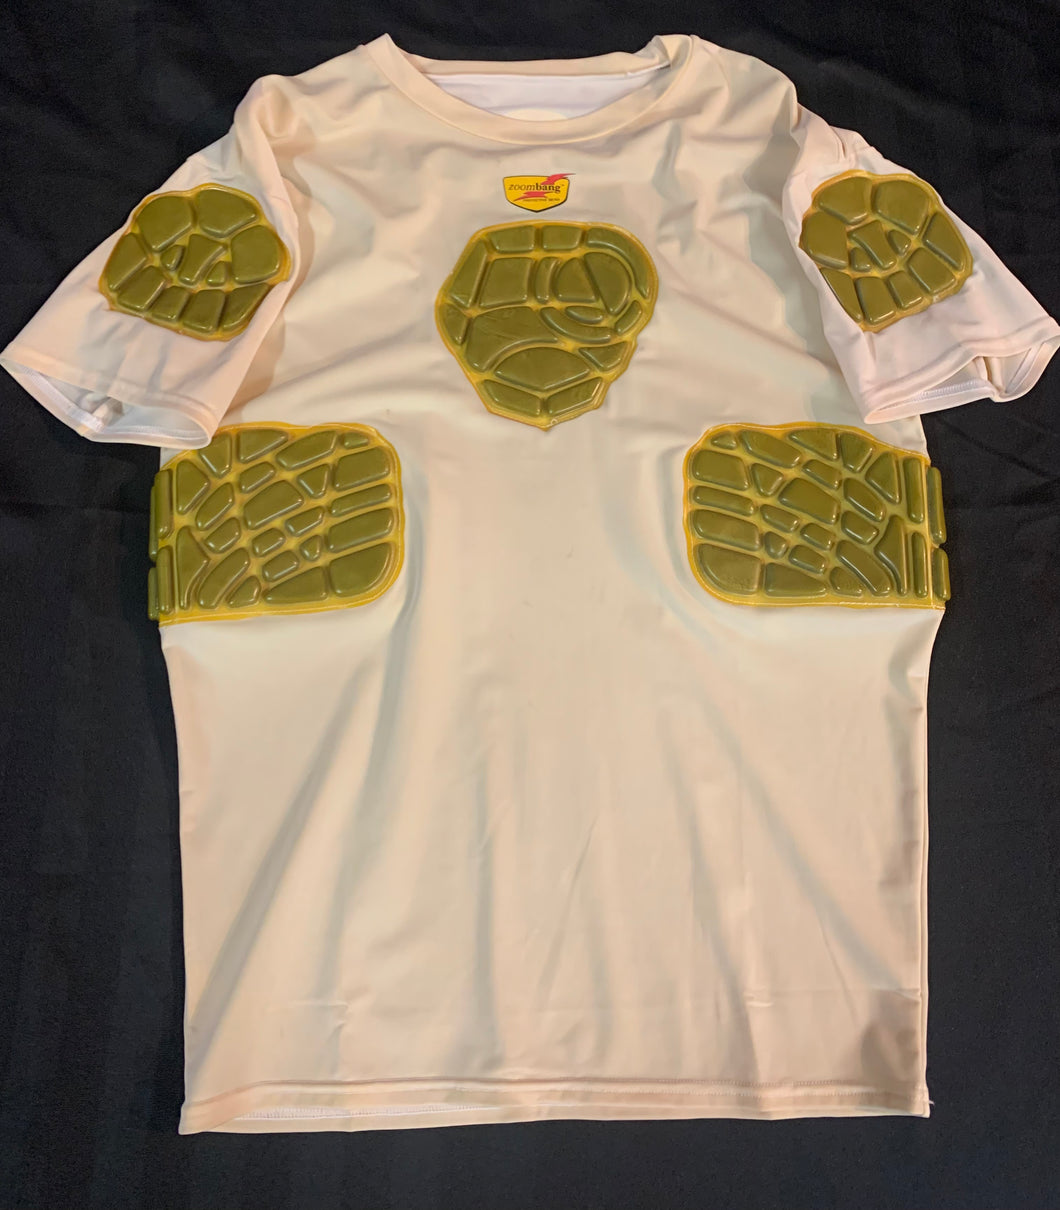 ZOOMBANG - Rib and deltoid combo shirt w/ heart pad - ADULT XL